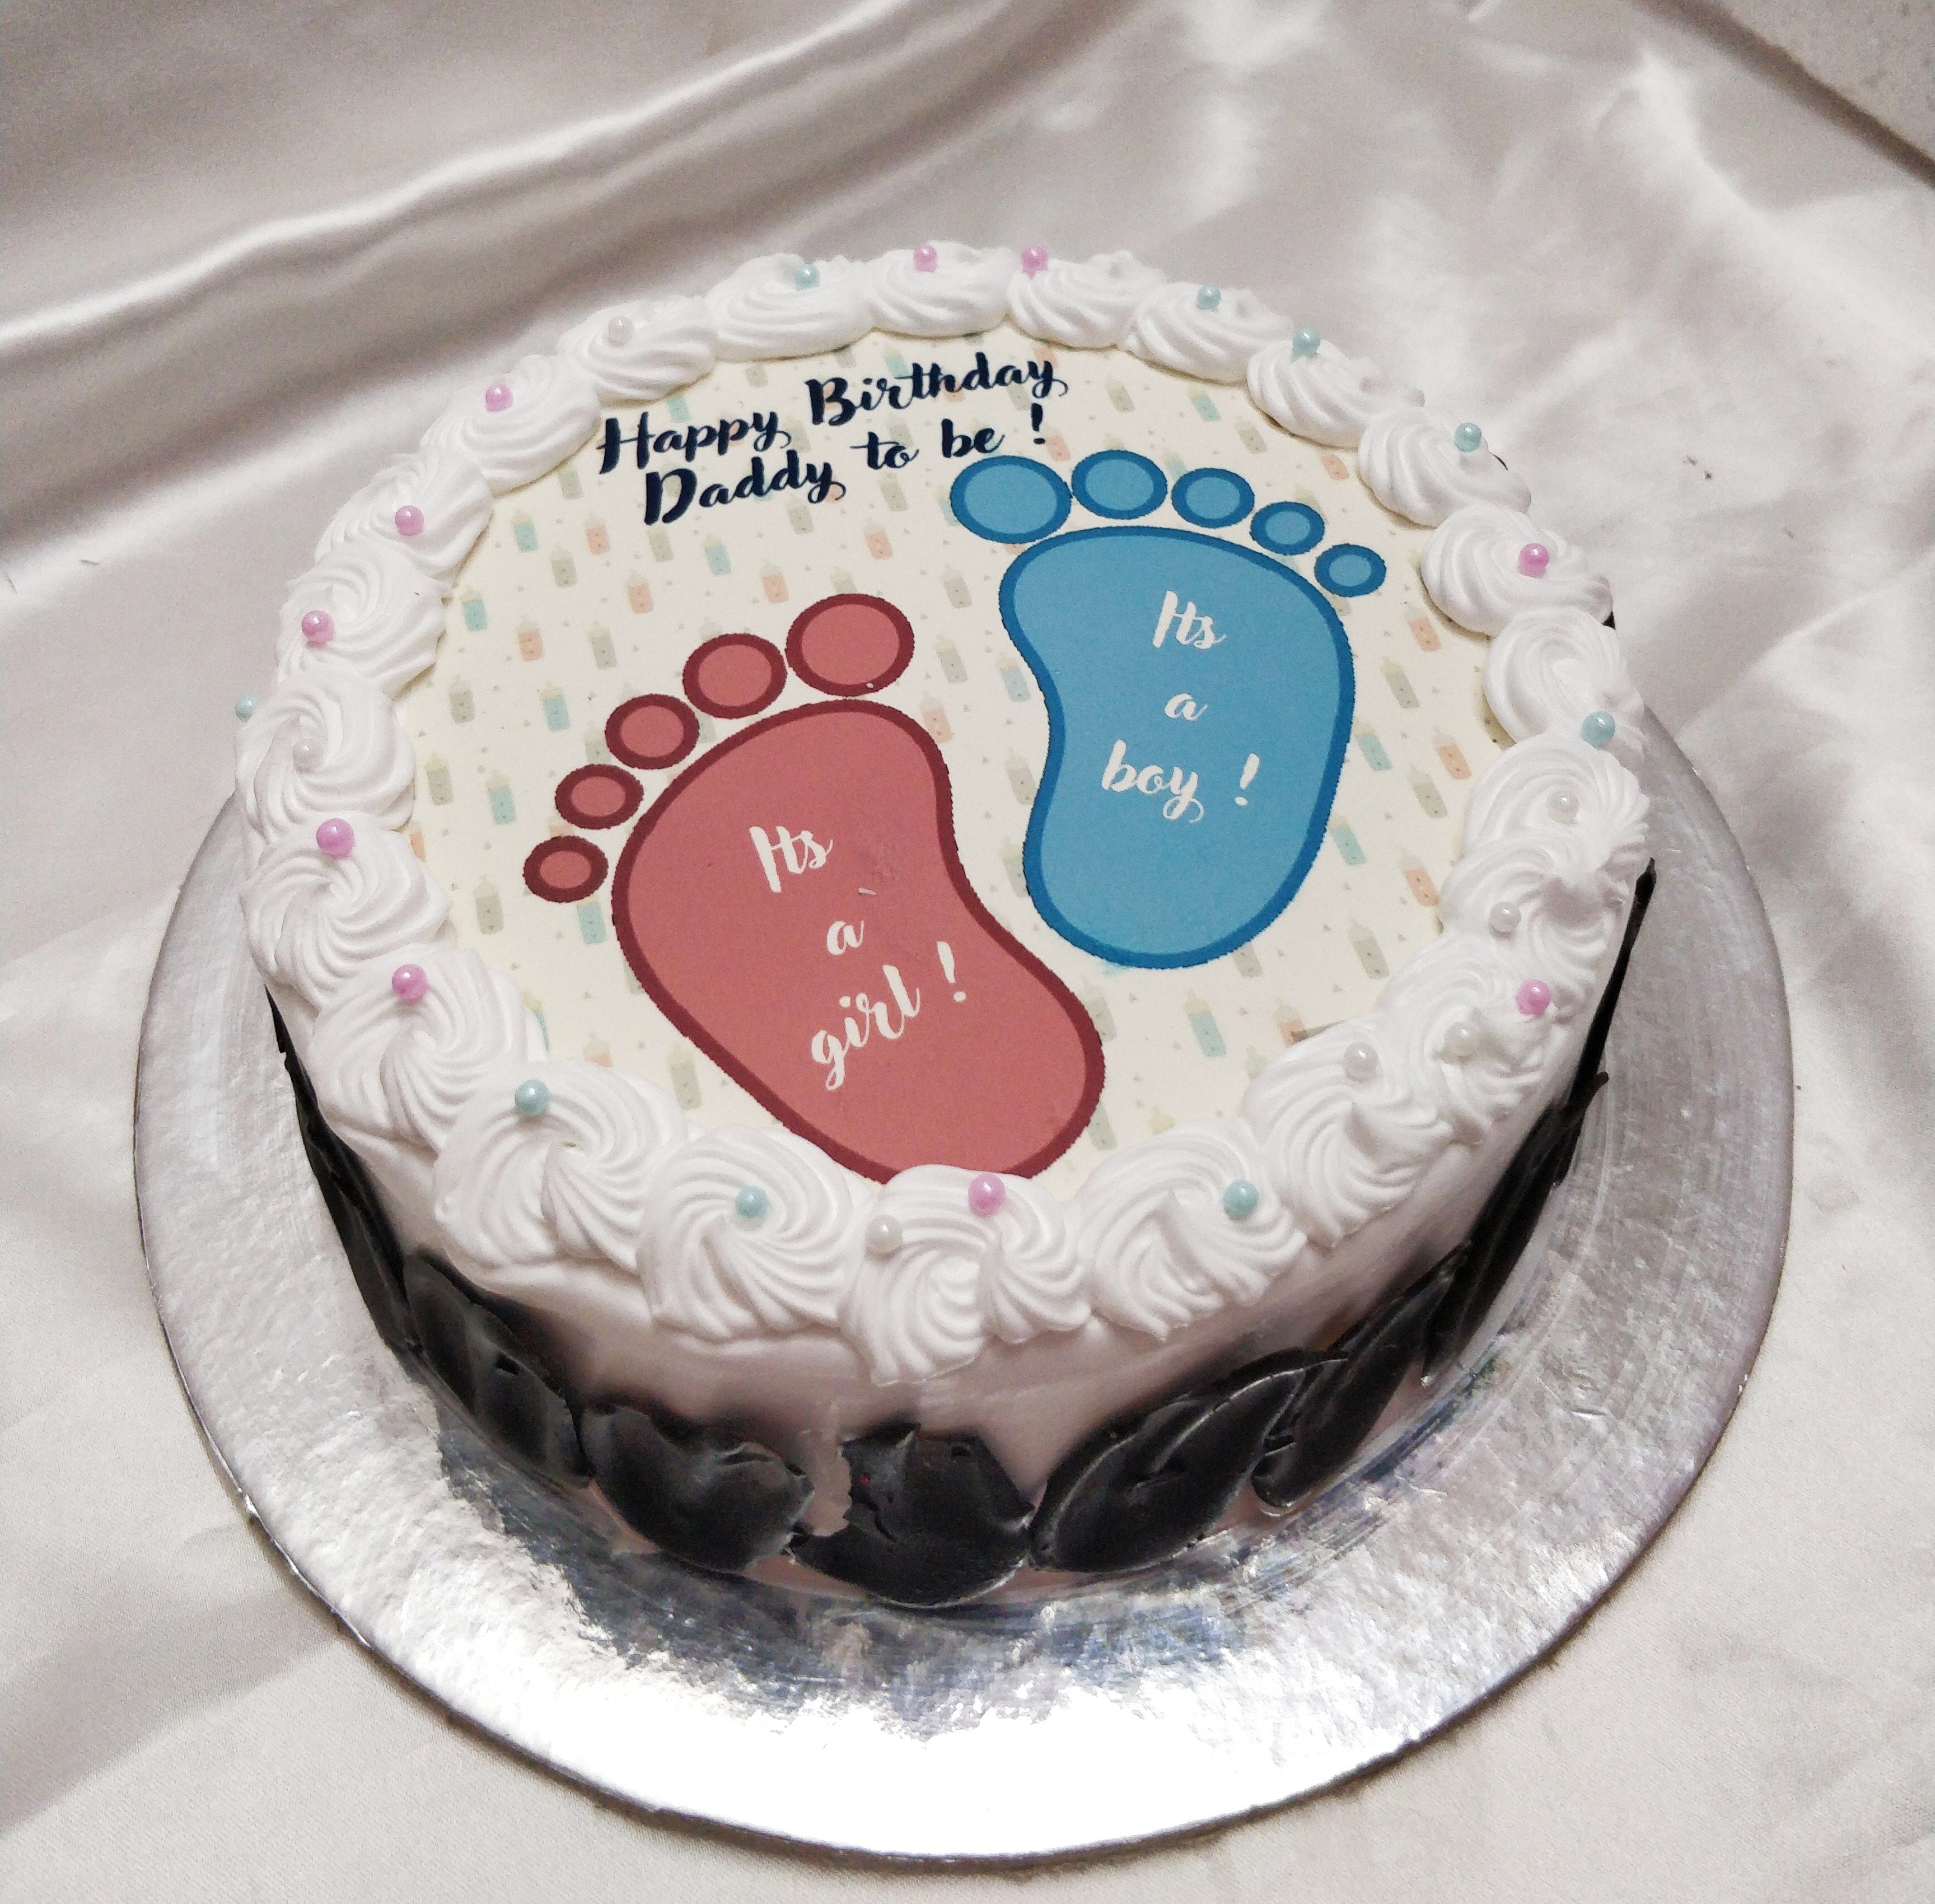 Anniversary Cake Designs | Best Wedding Anniversary Cake for Couples